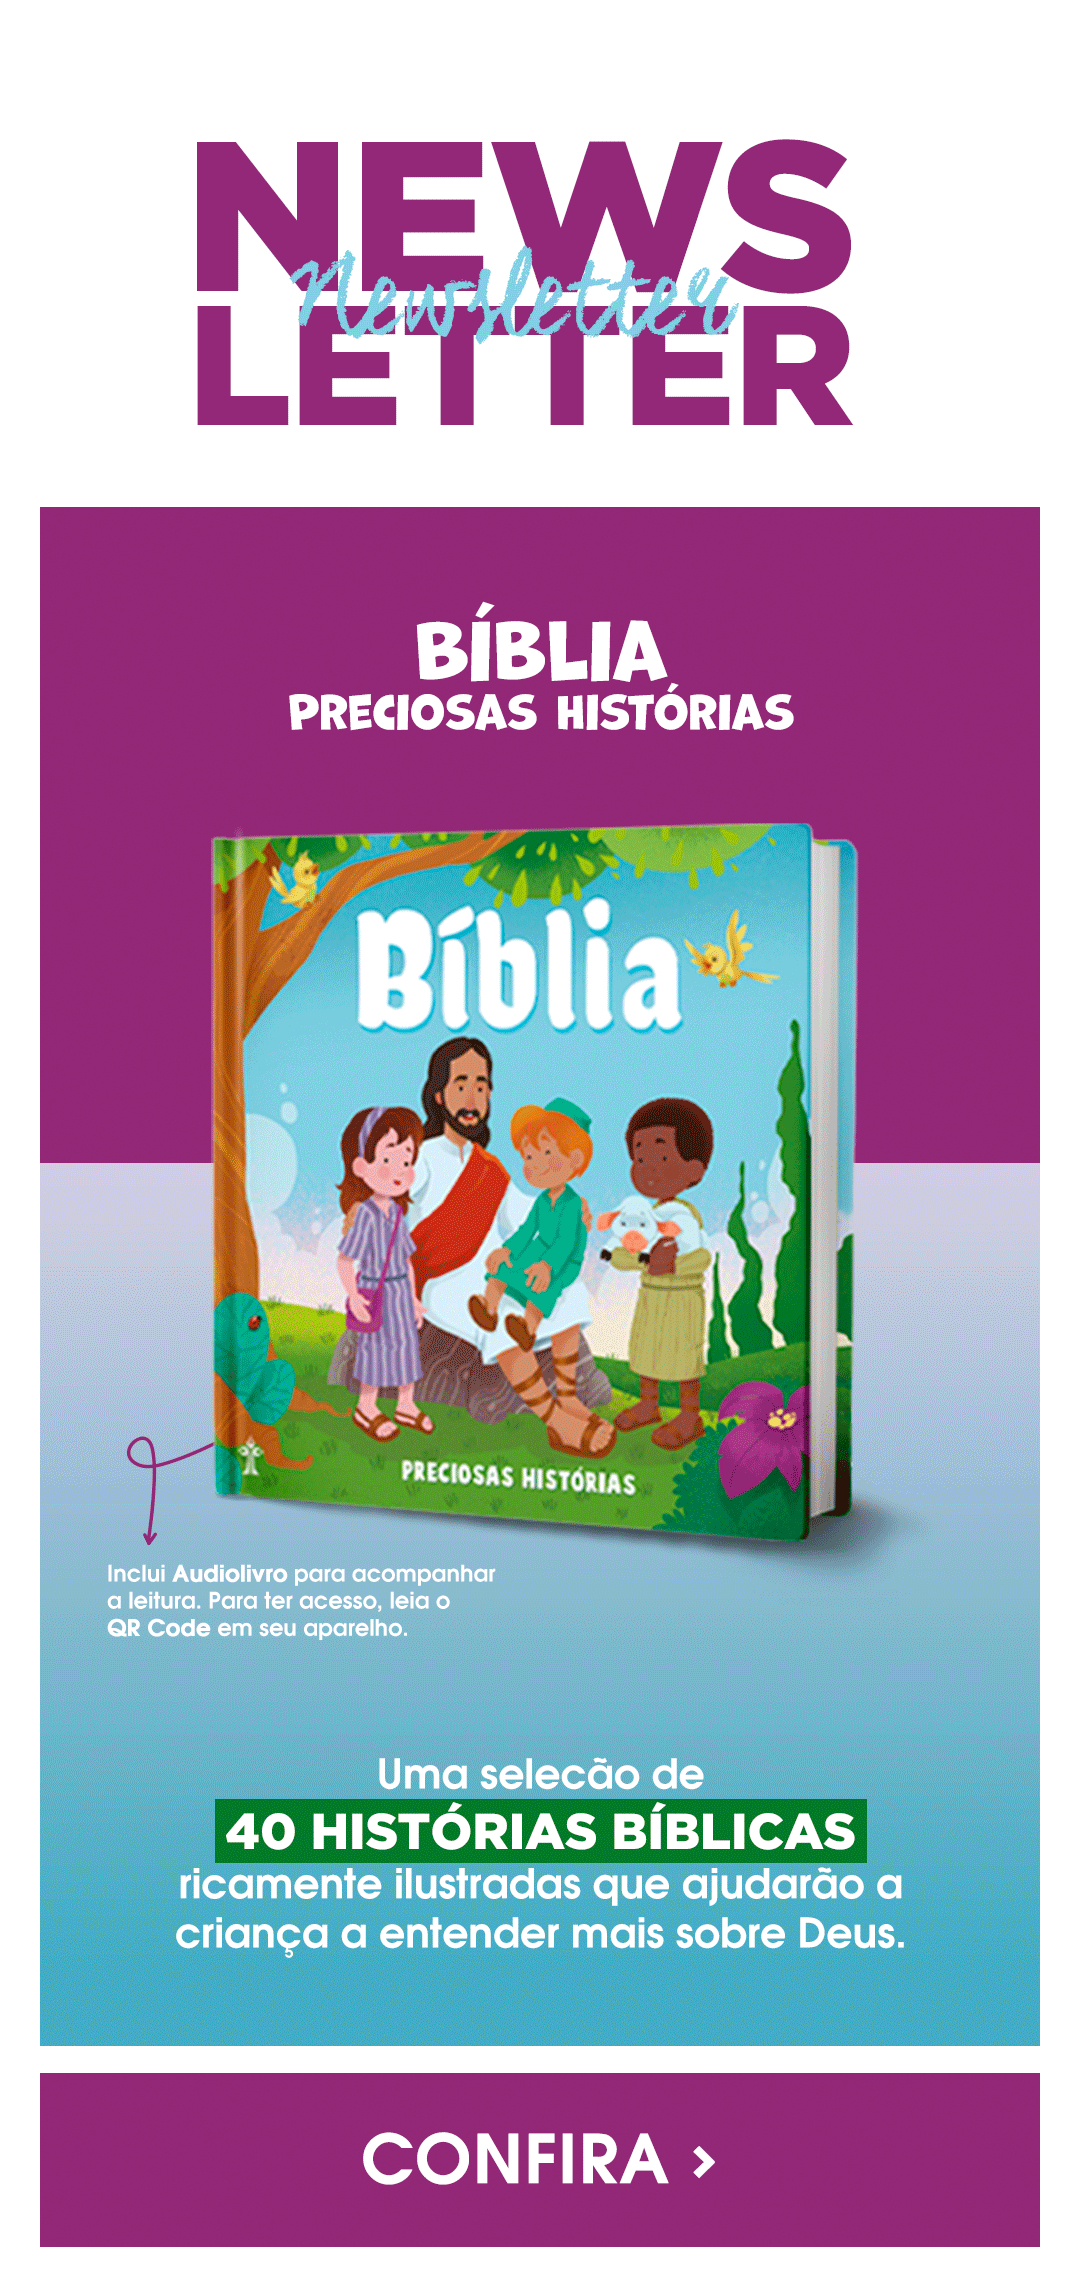 bible Biblia book books Email marketing   news newsletter photoshop social media